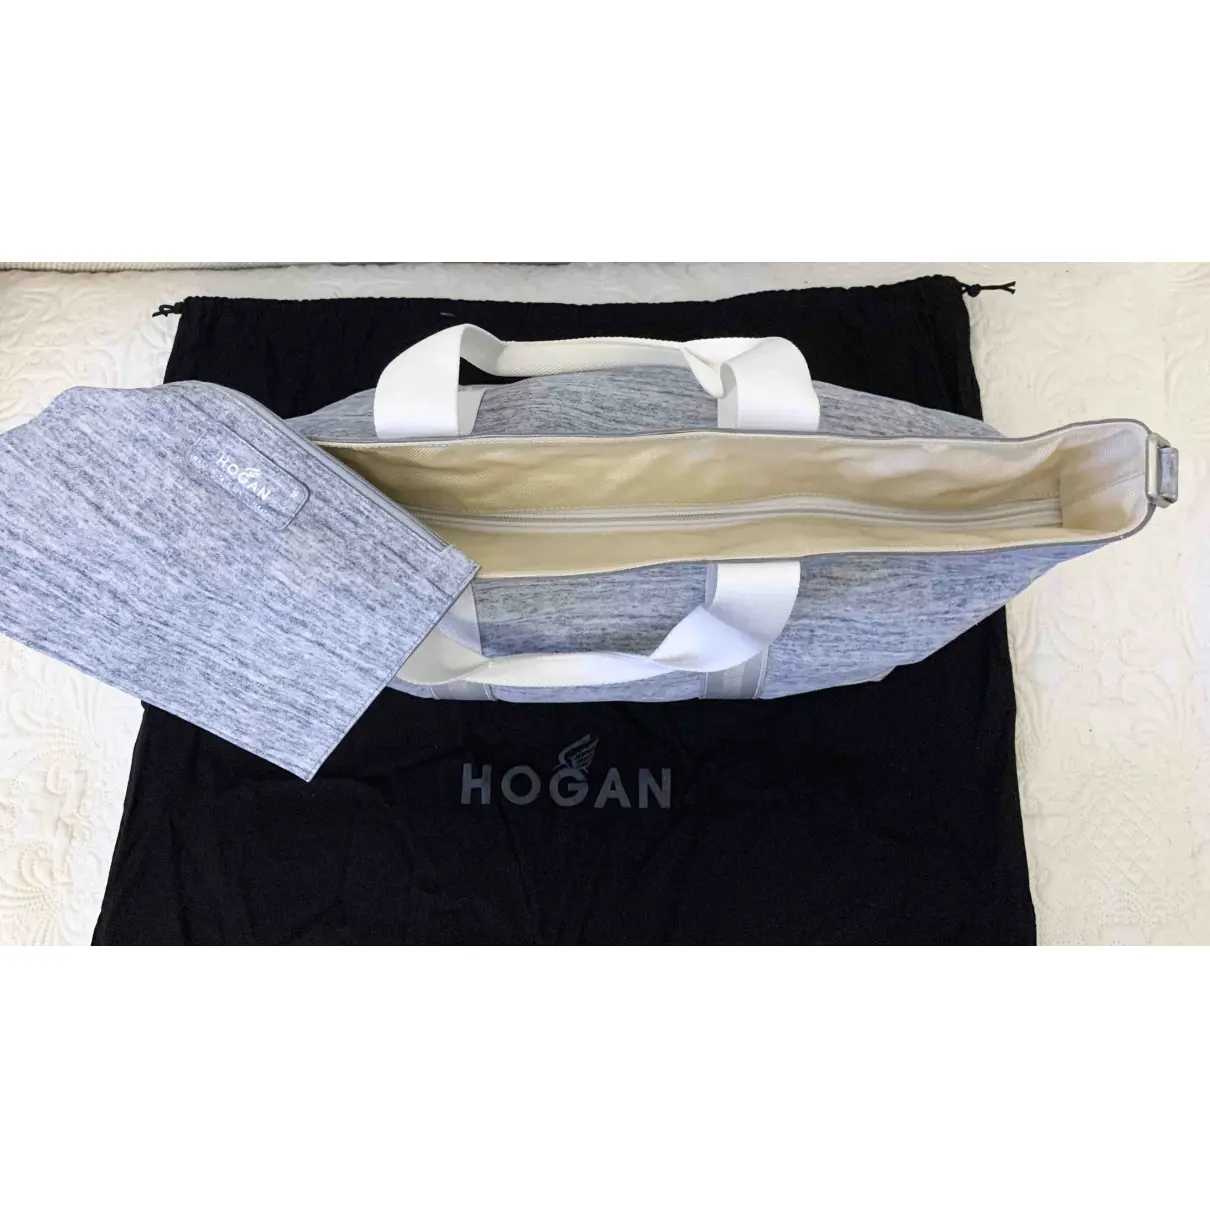 Hogan Cloth tote for sale